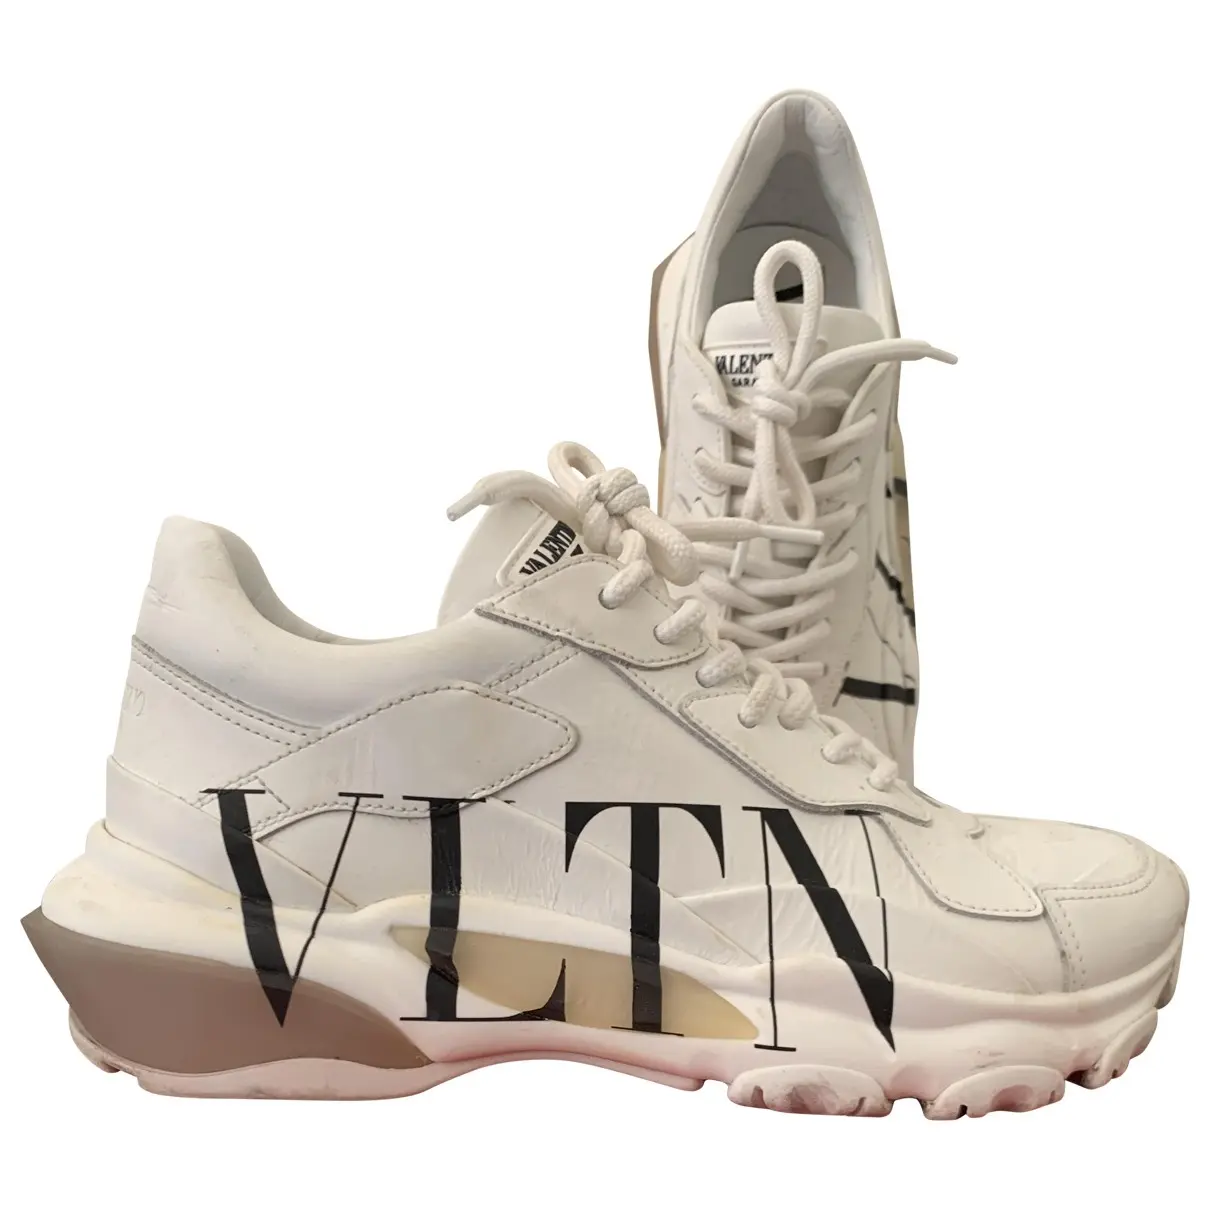 Bounce VLTN leather trainers Valentino Garavani